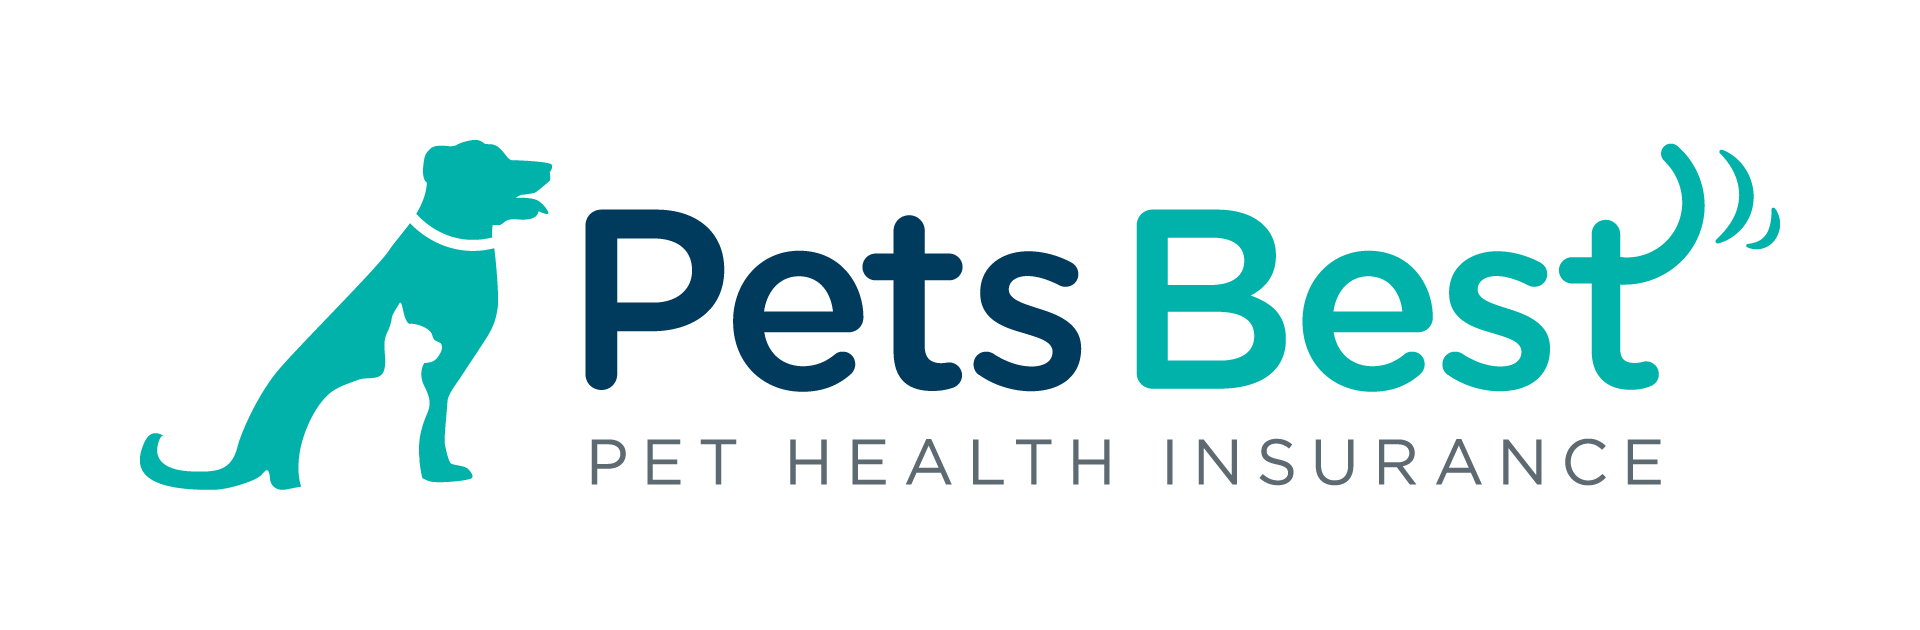 Pets Best Pet Health Insurance Logo